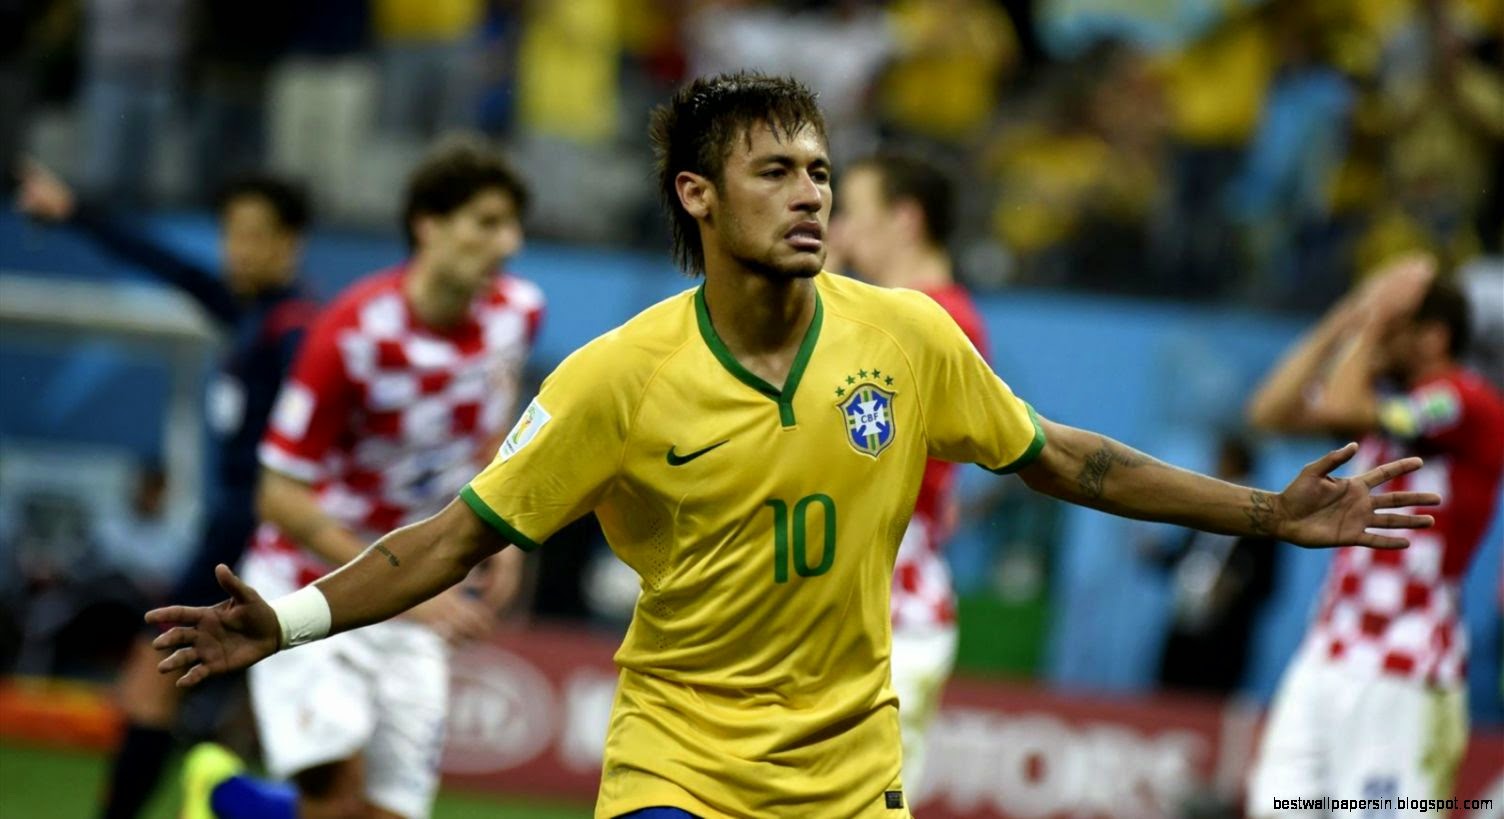 Barzil Vs Croatia Neymar Goals Two